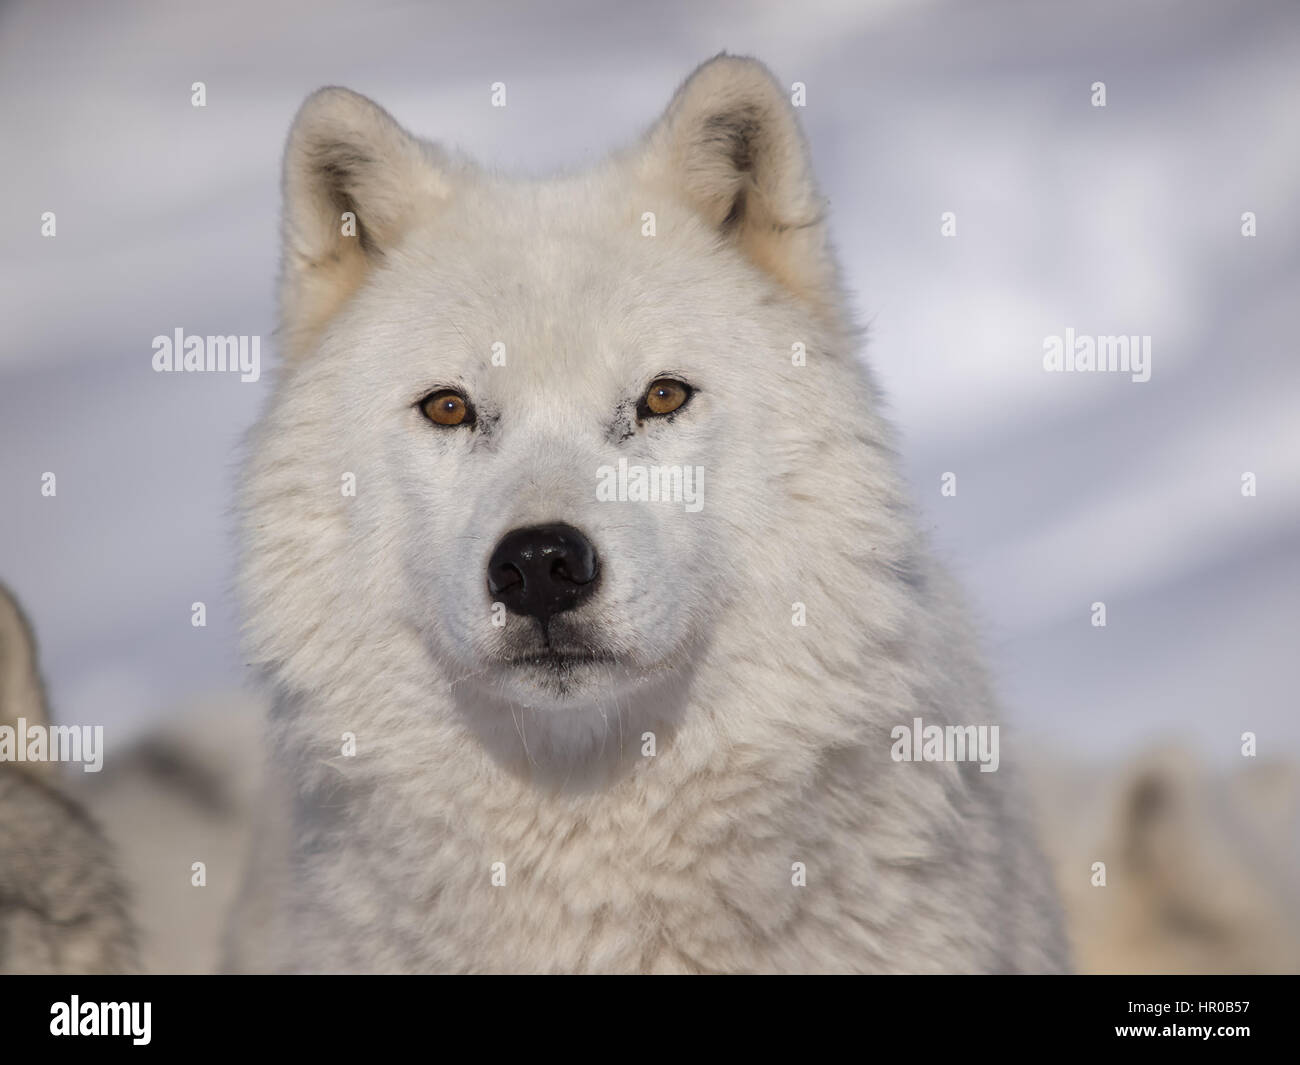 White Alpha Male Arctic Wolf Stock Photos & White Alpha Male Arctic ...